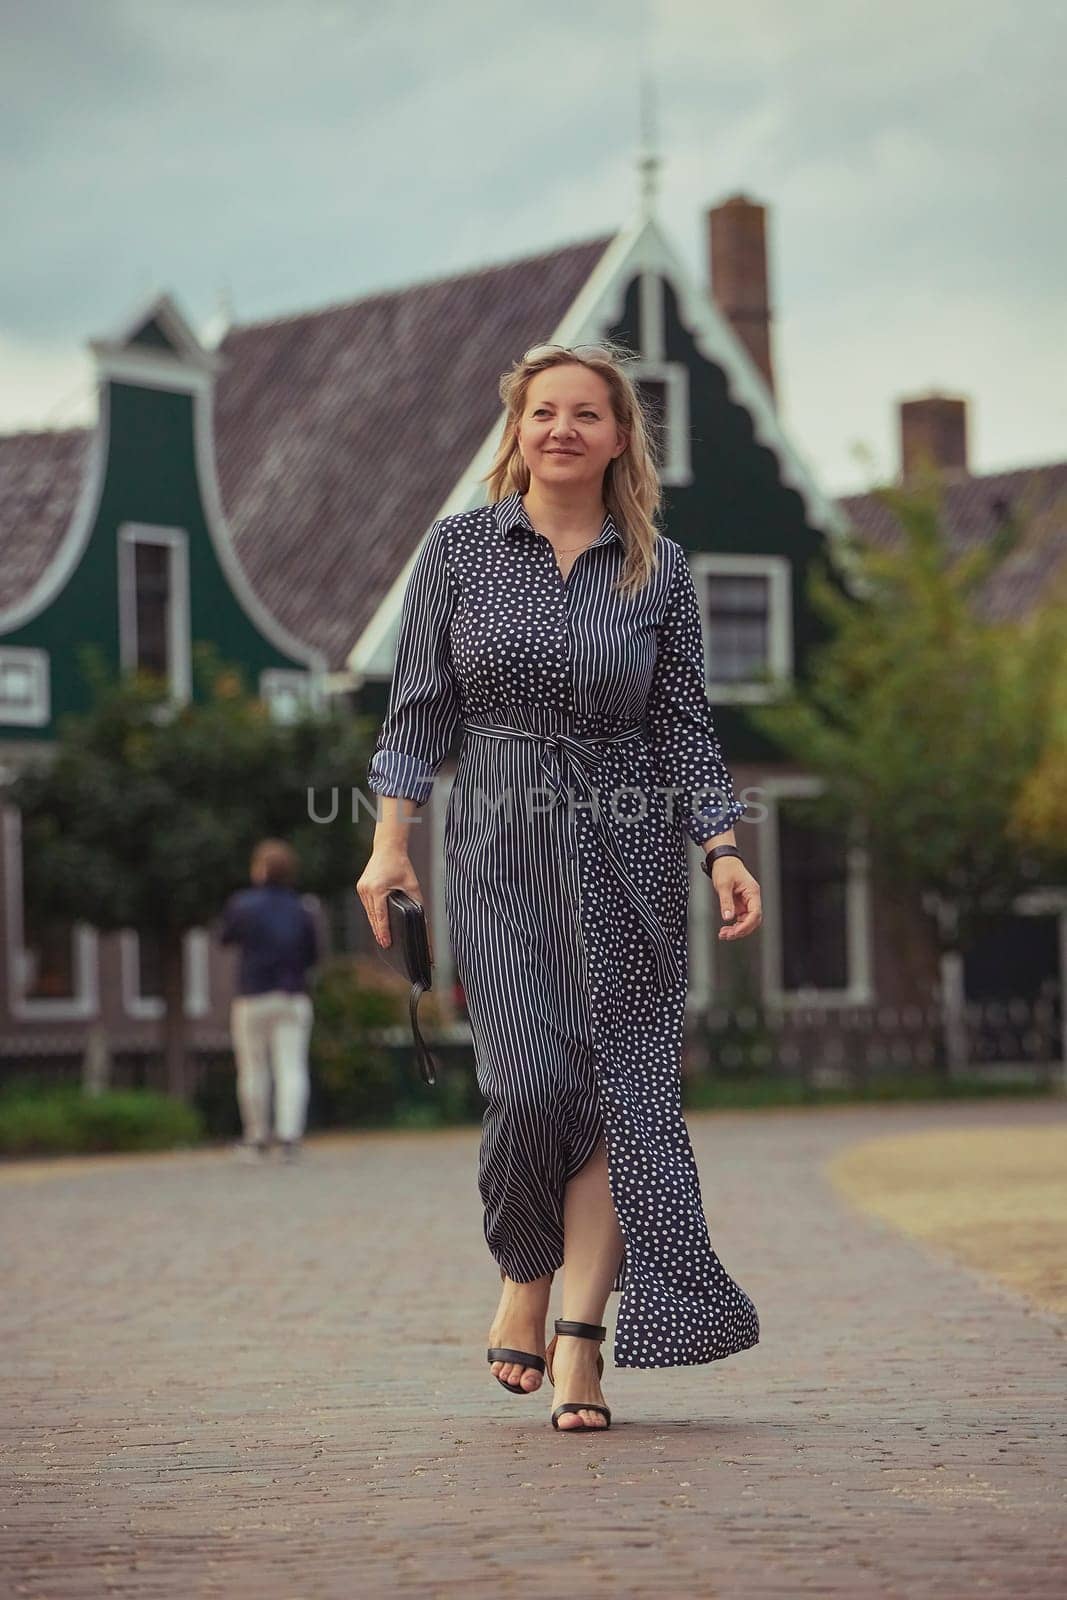 Beautiful woman in a dress in the evening Zaanstad, Netherlands by Viktor_Osypenko